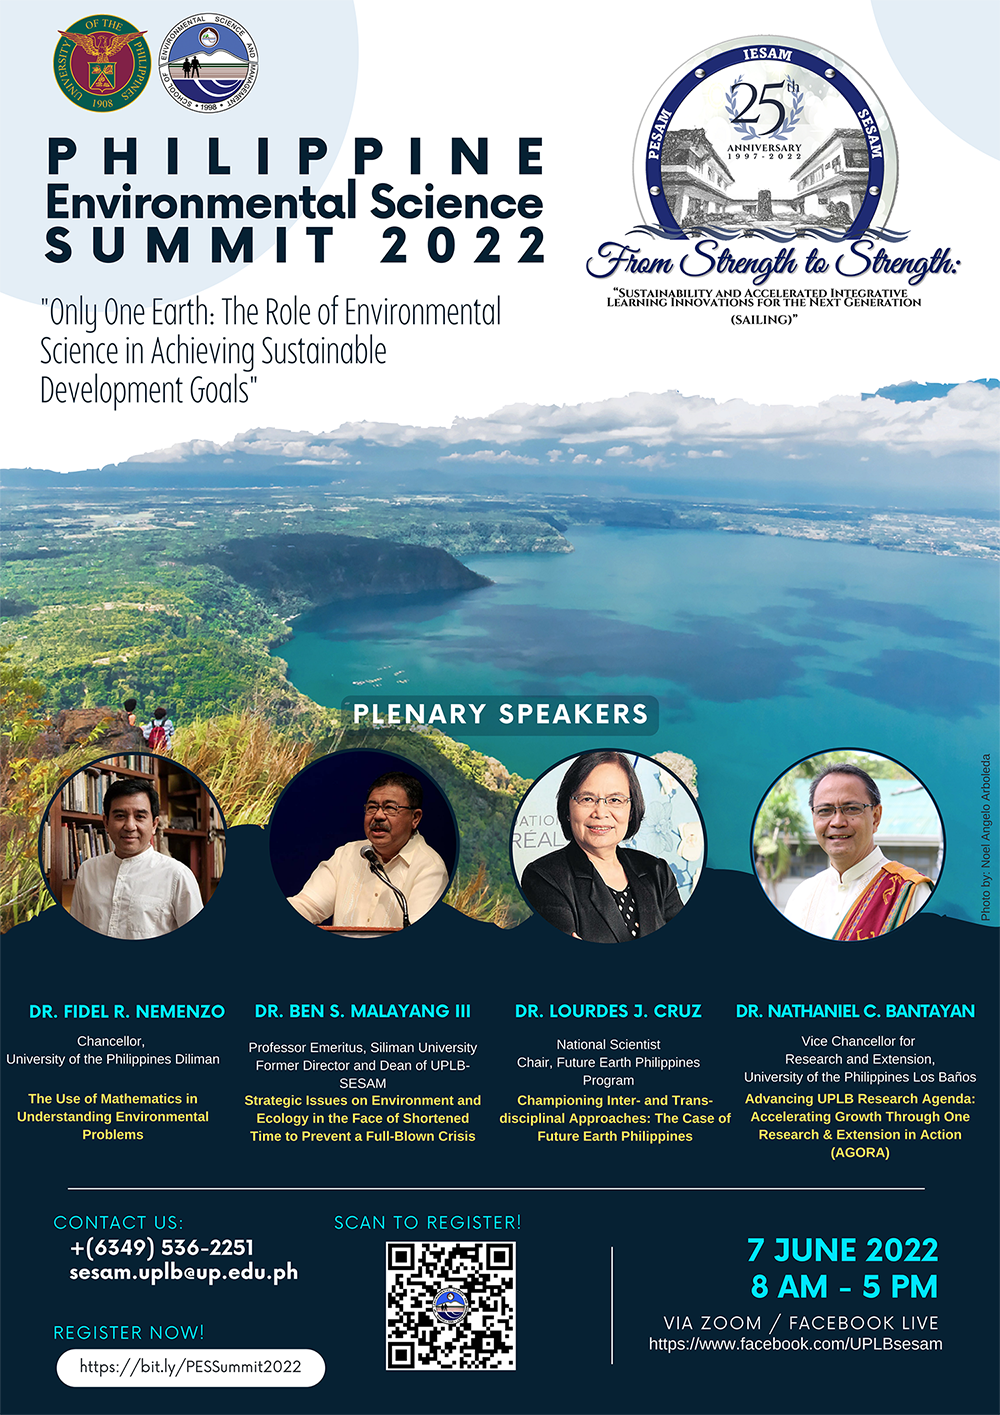 Philippine Environmental Science Summit 2022 to kick-off SESAM 25th anniversary celebration